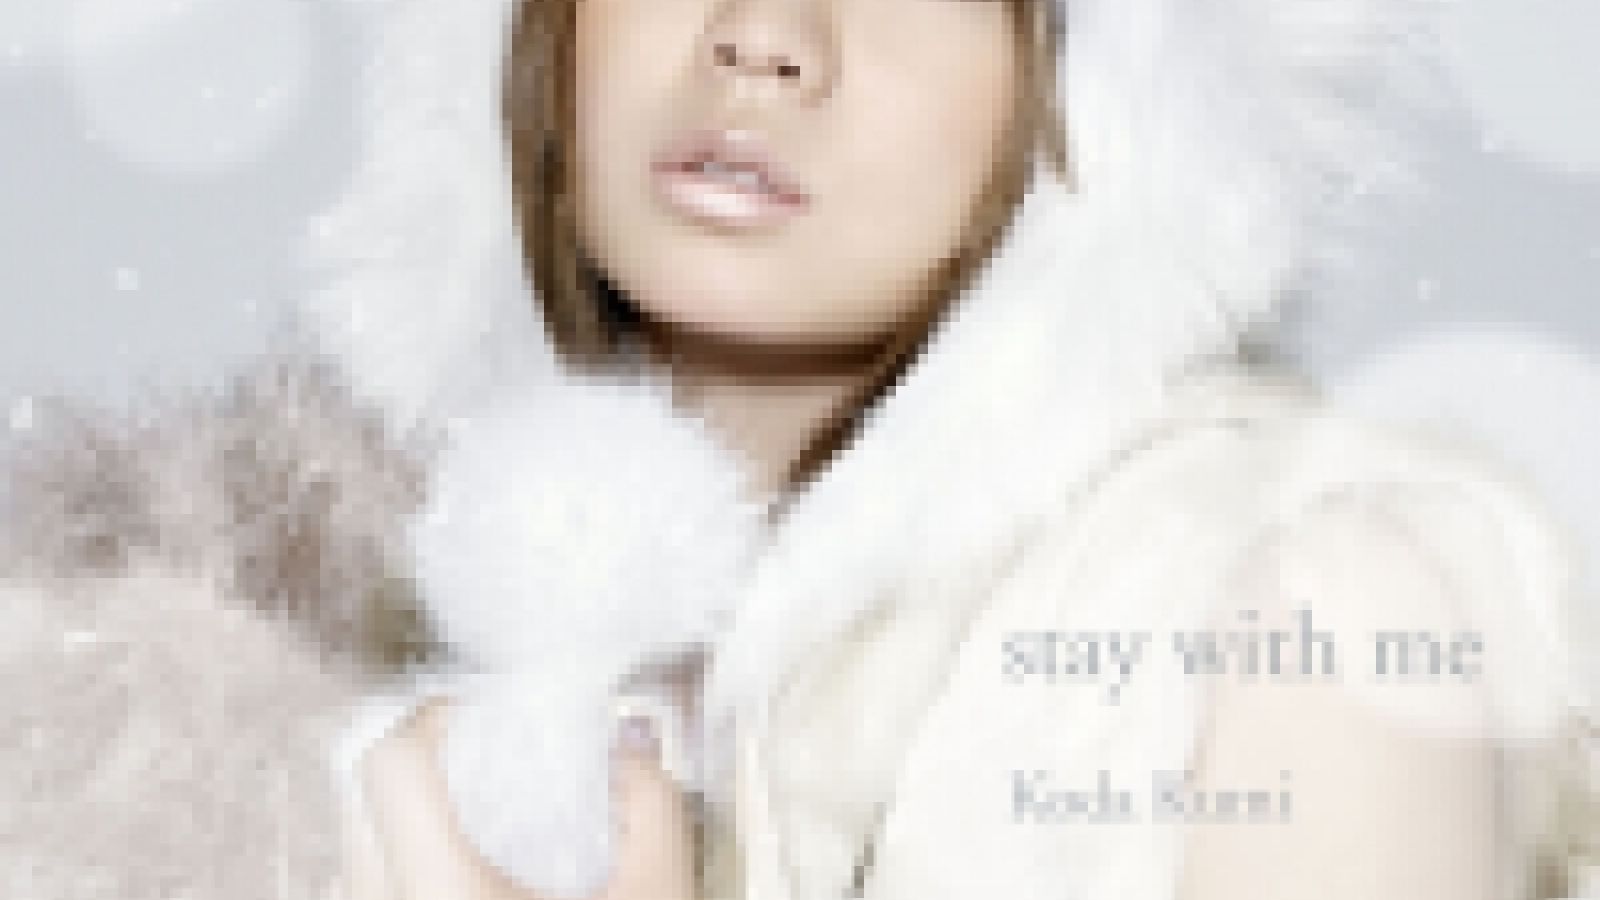 Koda Kumi - stay with me © 